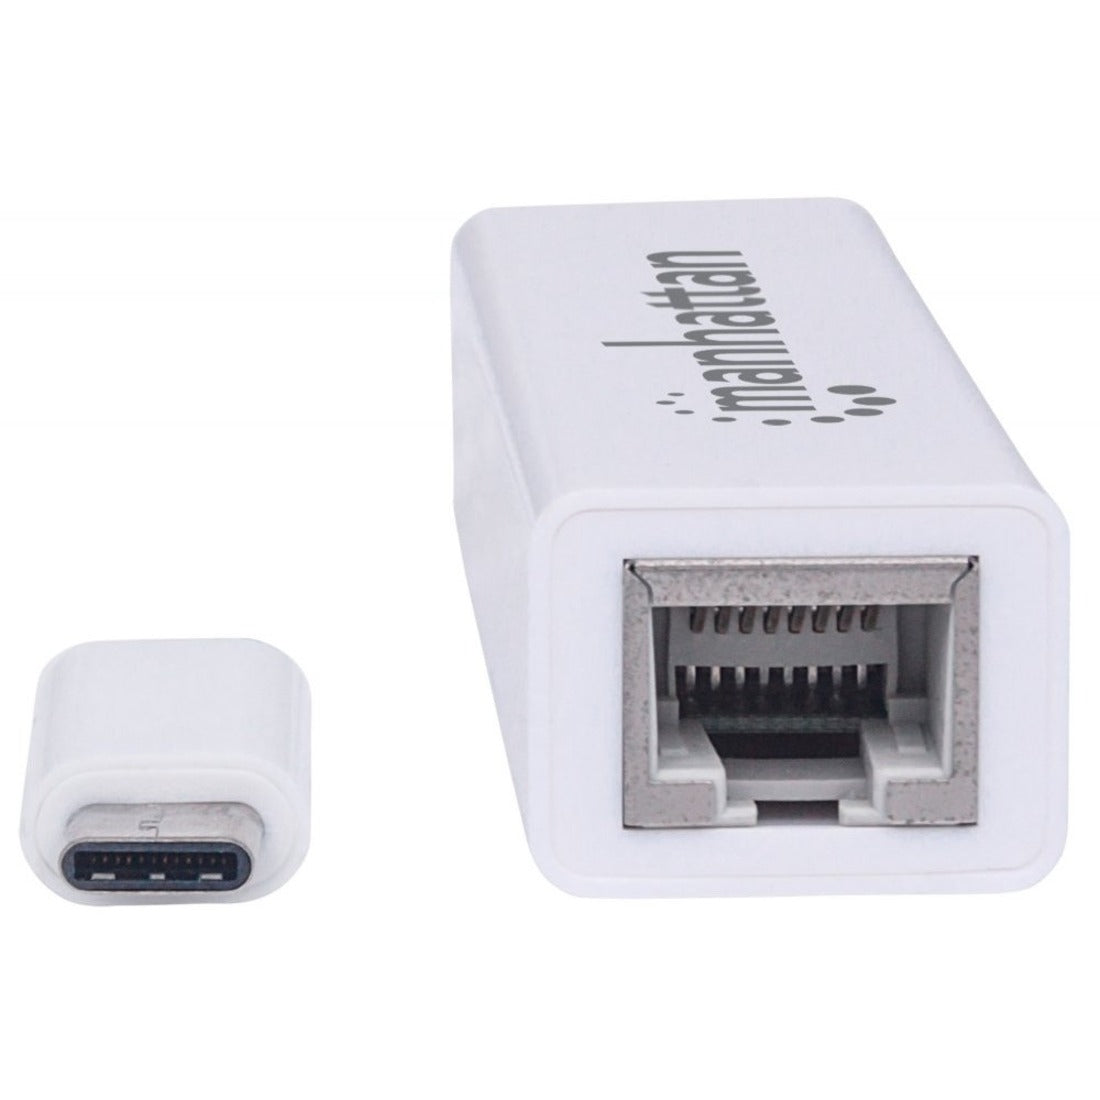 Manhattan 507585 Type-C to Gigabit Network Adapter, USB 3.1 (Gen 1) Type C, Twisted Pair, Portable